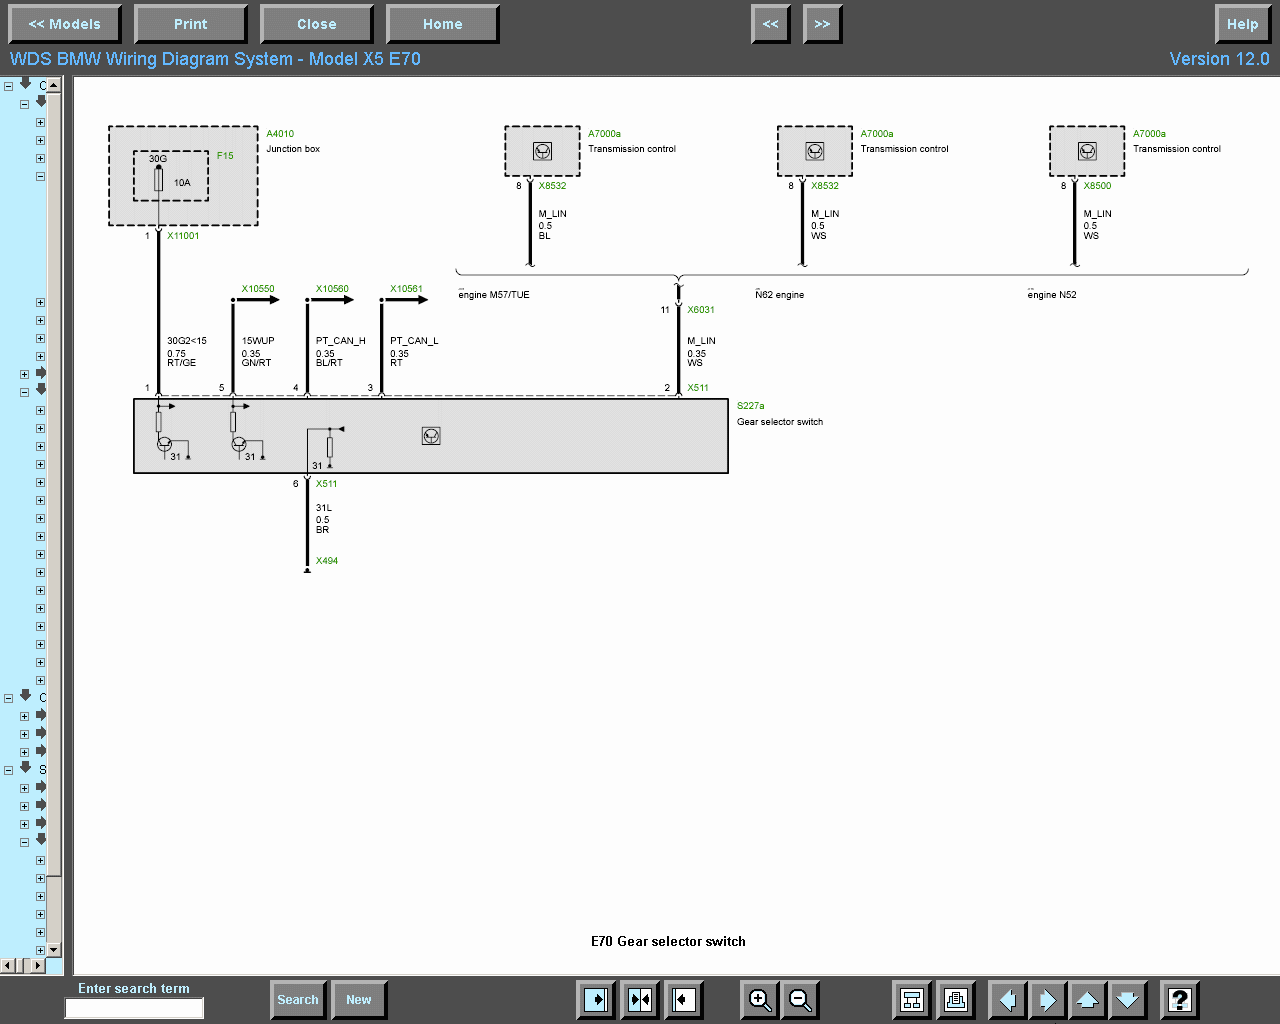 Bmw wiring diagram system 12.0 #6